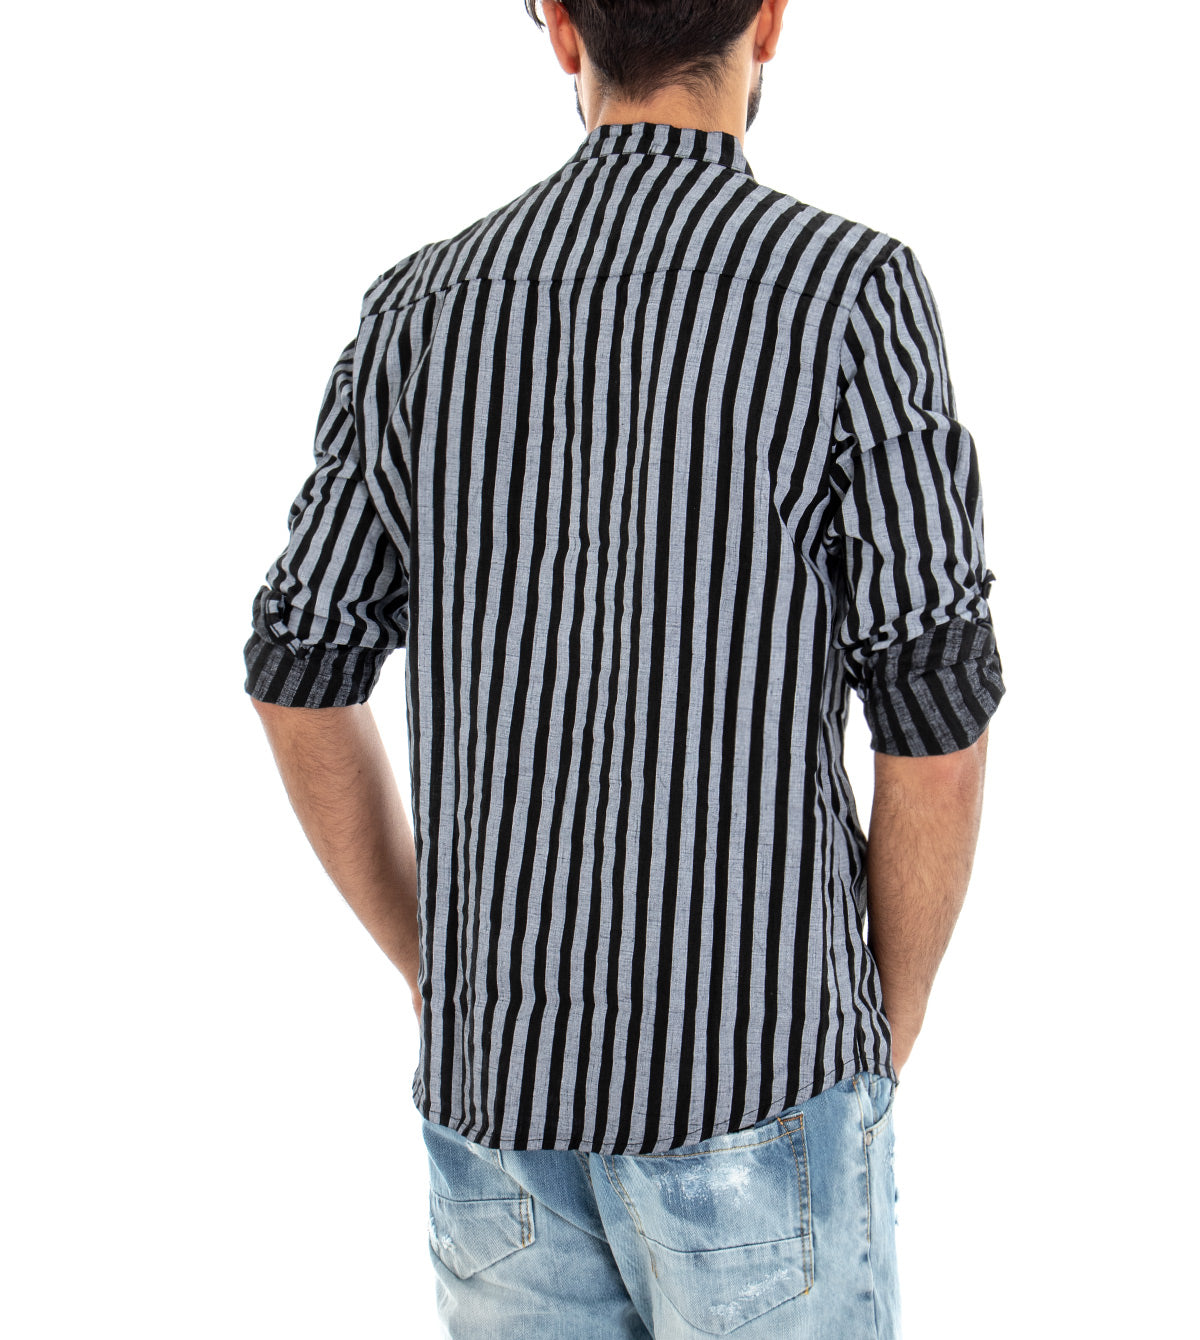 Men's Mandarin Collar Striped Black Shirt Long Sleeve Linen Cotton GIOSAL-C1563A